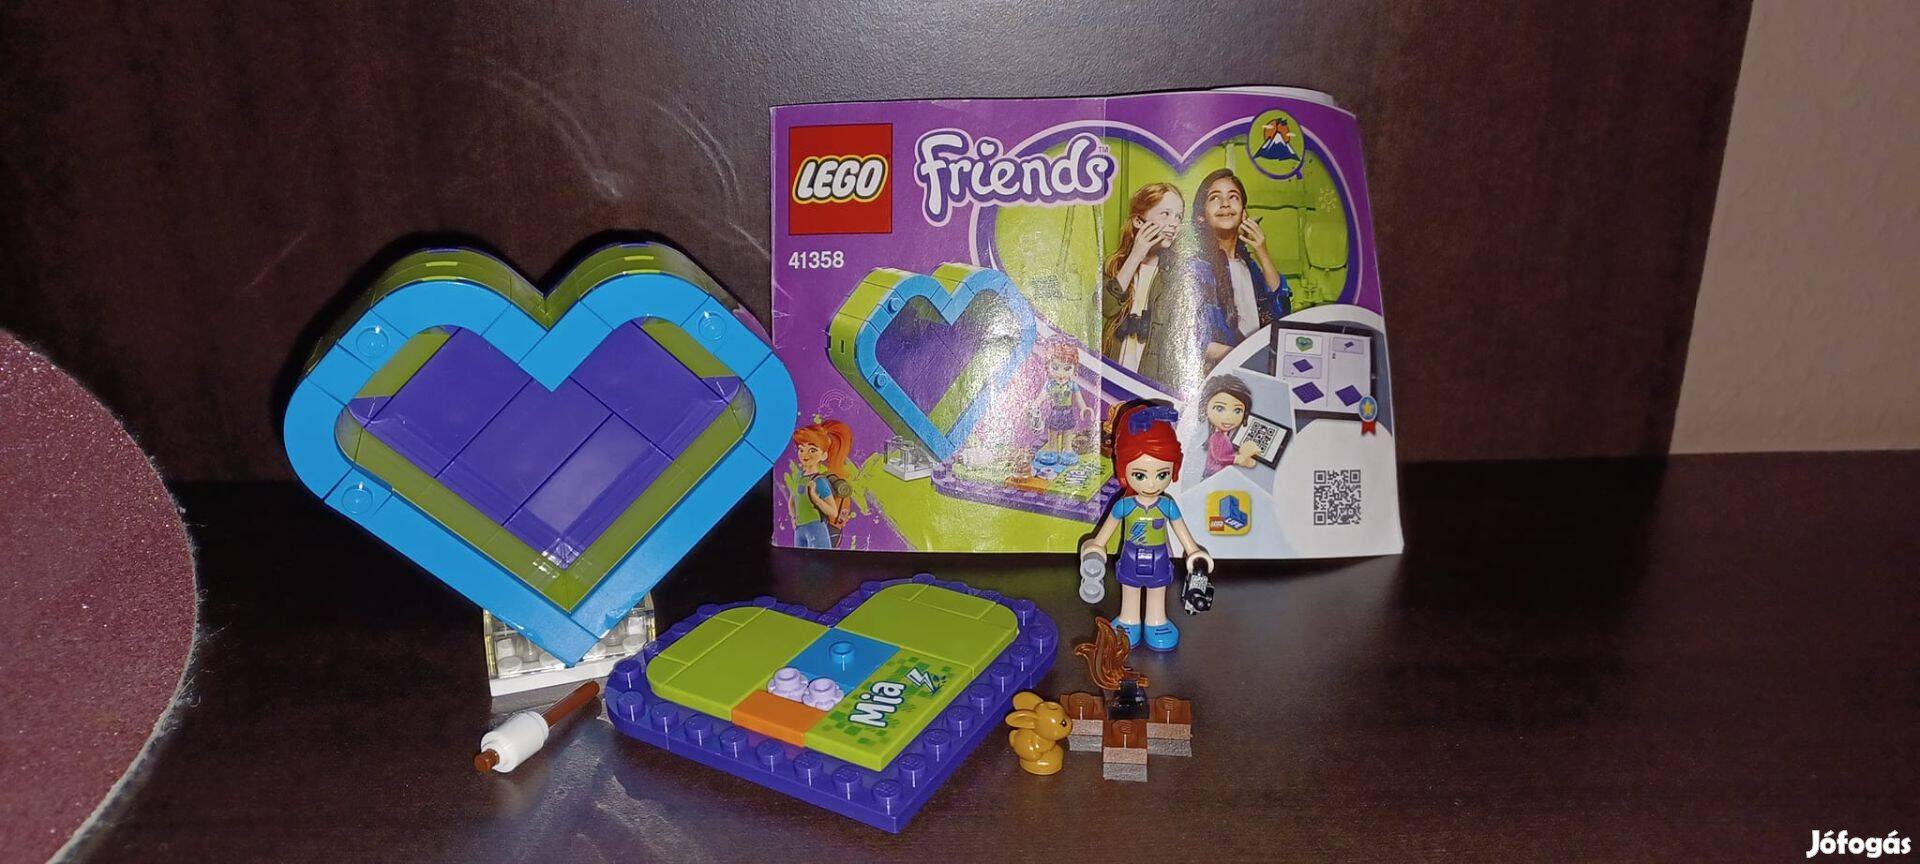 41358 - LEGO Friends Mia Szív alakú doboza